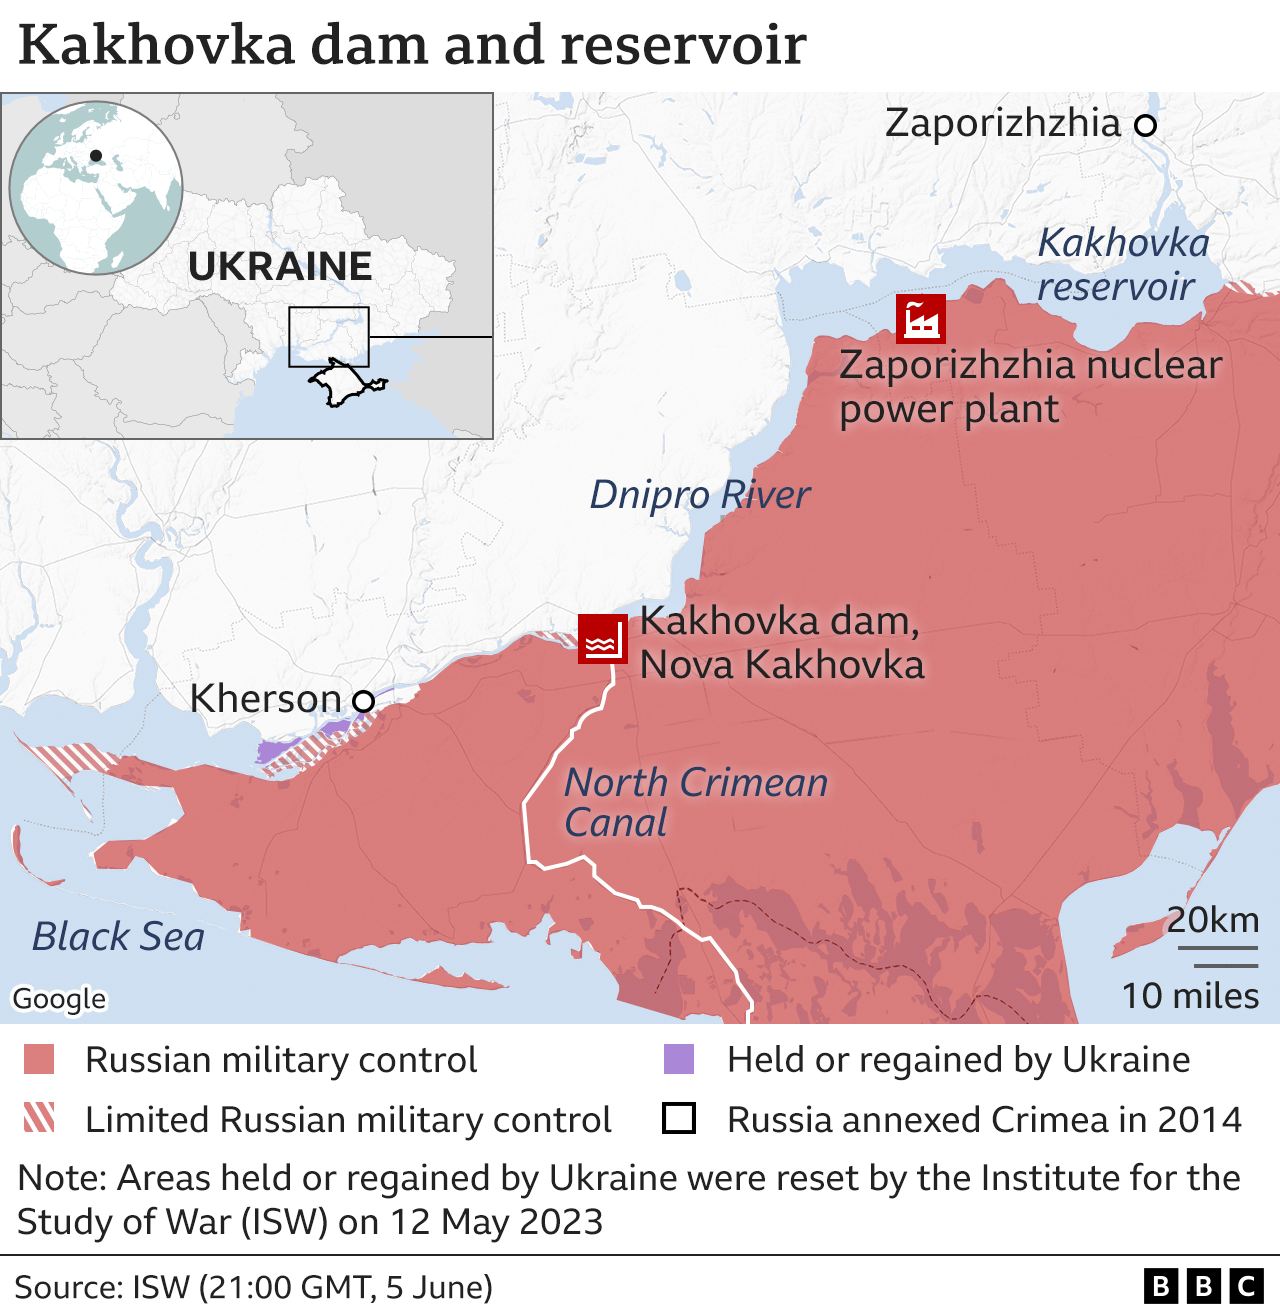 A map shows the Zaporizhzhia power plant and the Kakhovka dam in Ukraine